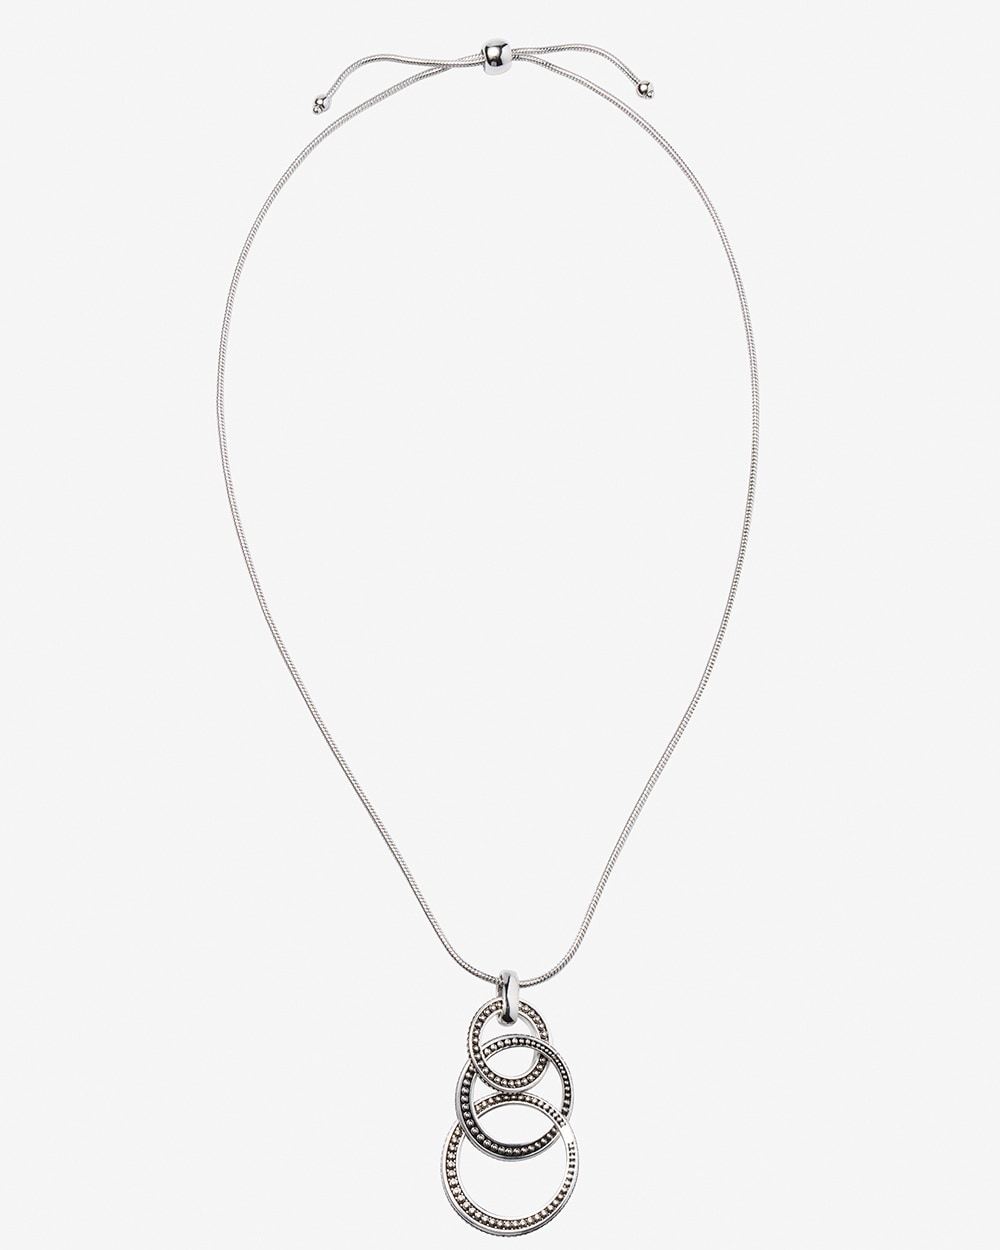 Textured Silvertone Pendant Adjustable Necklace